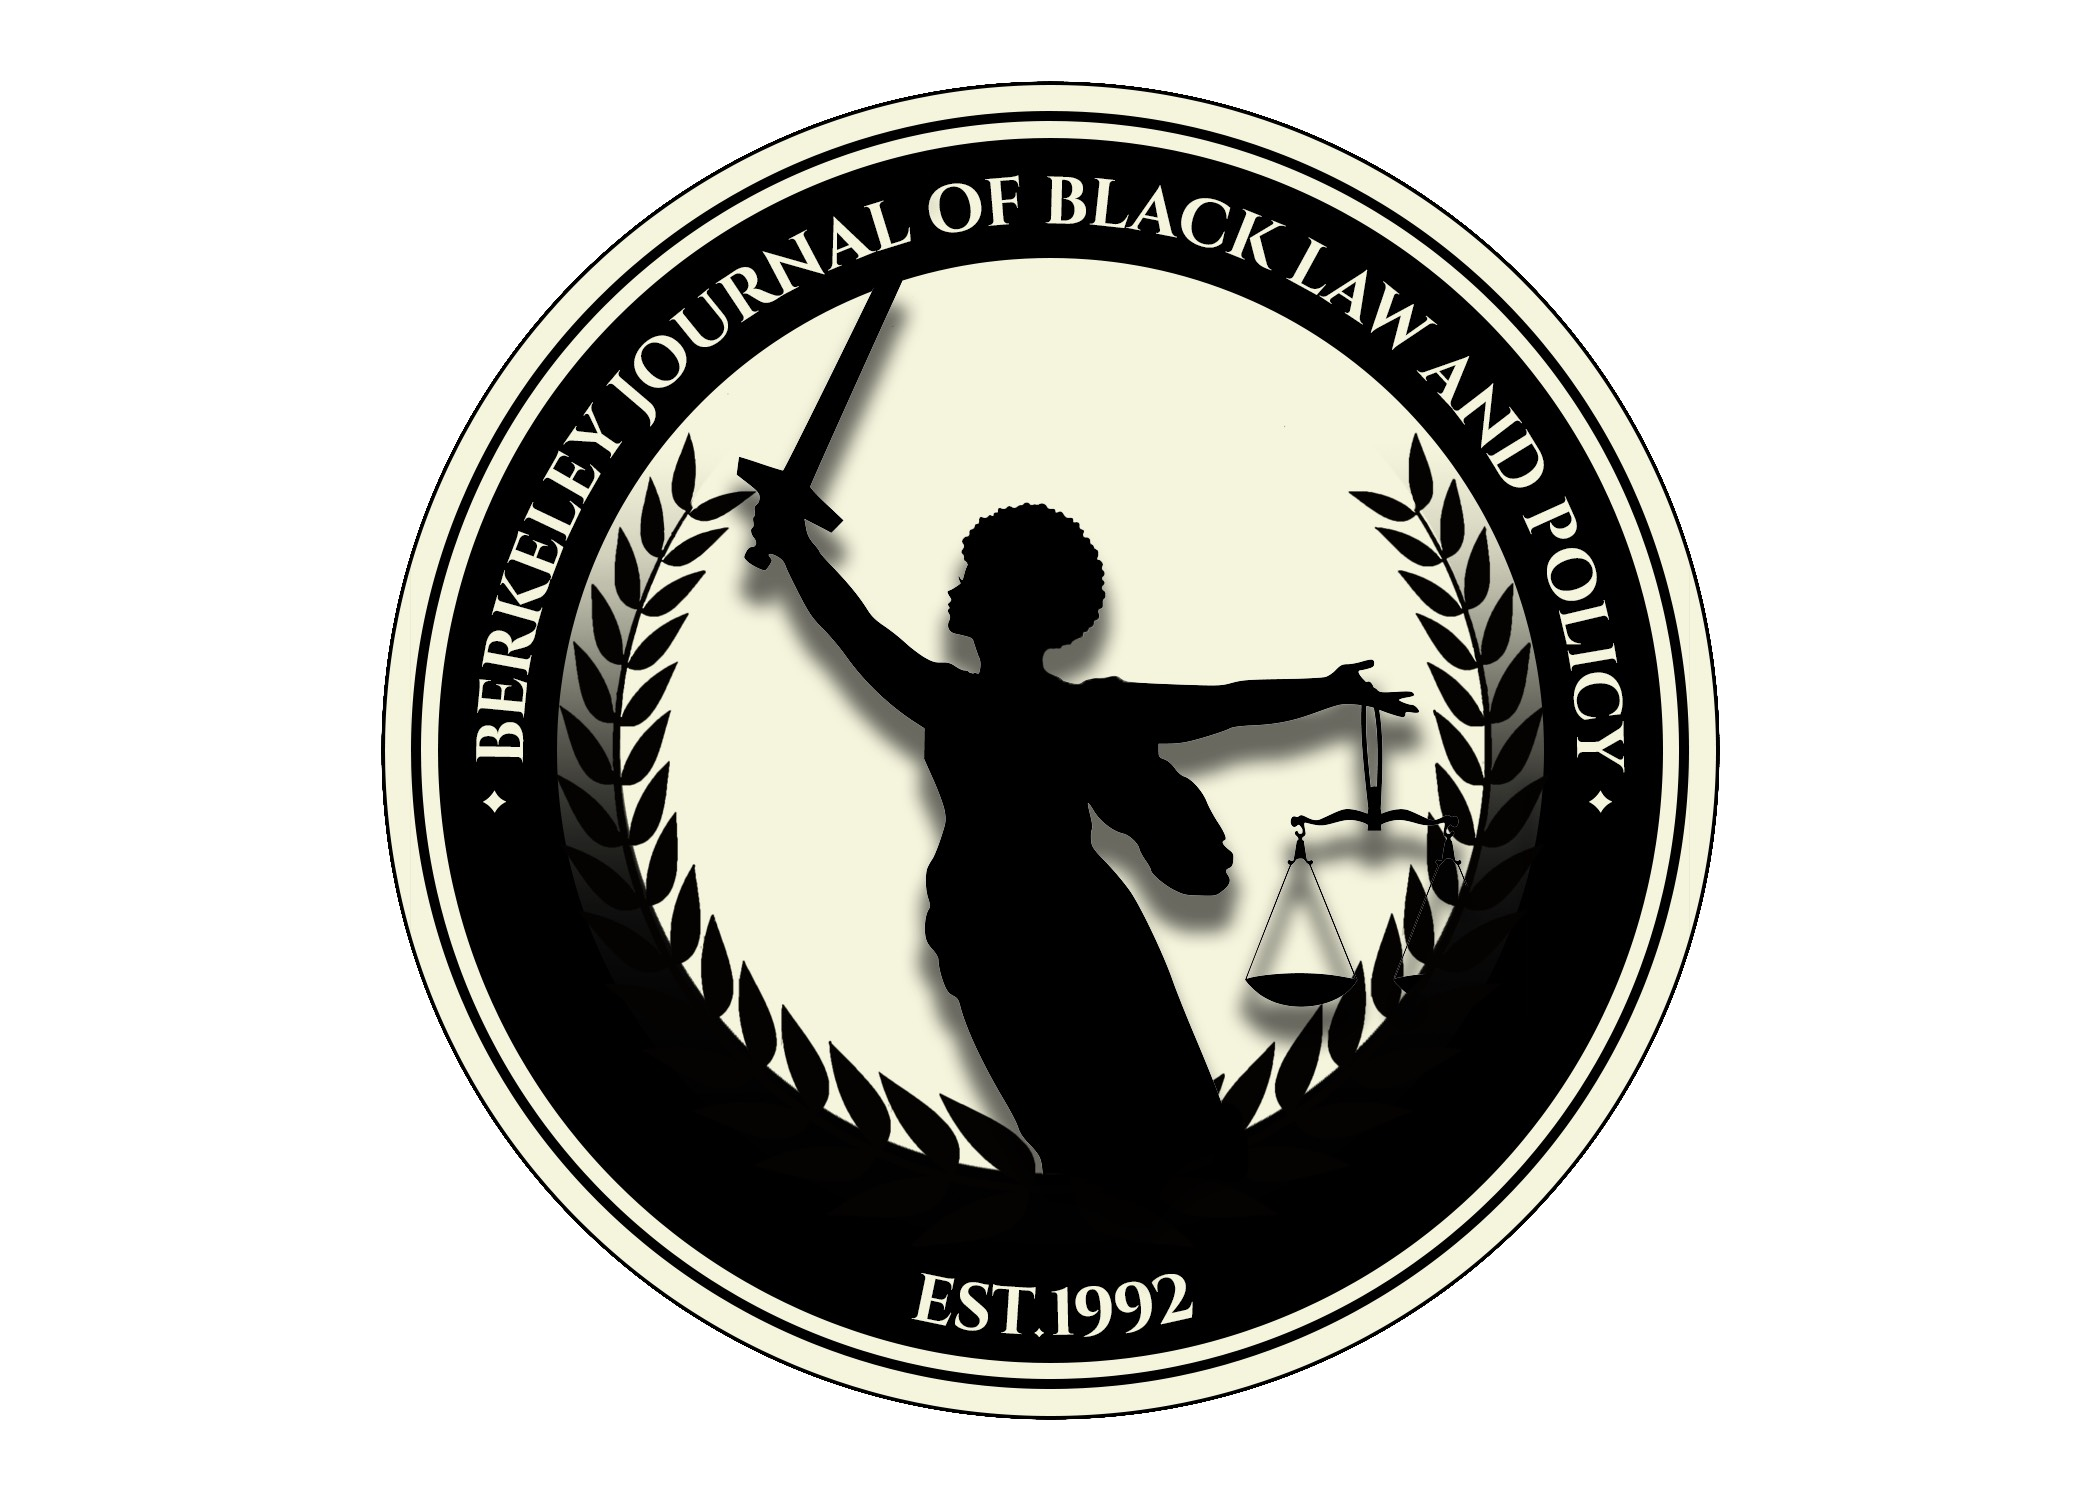 Berkeley Journal of Black Law & Policy